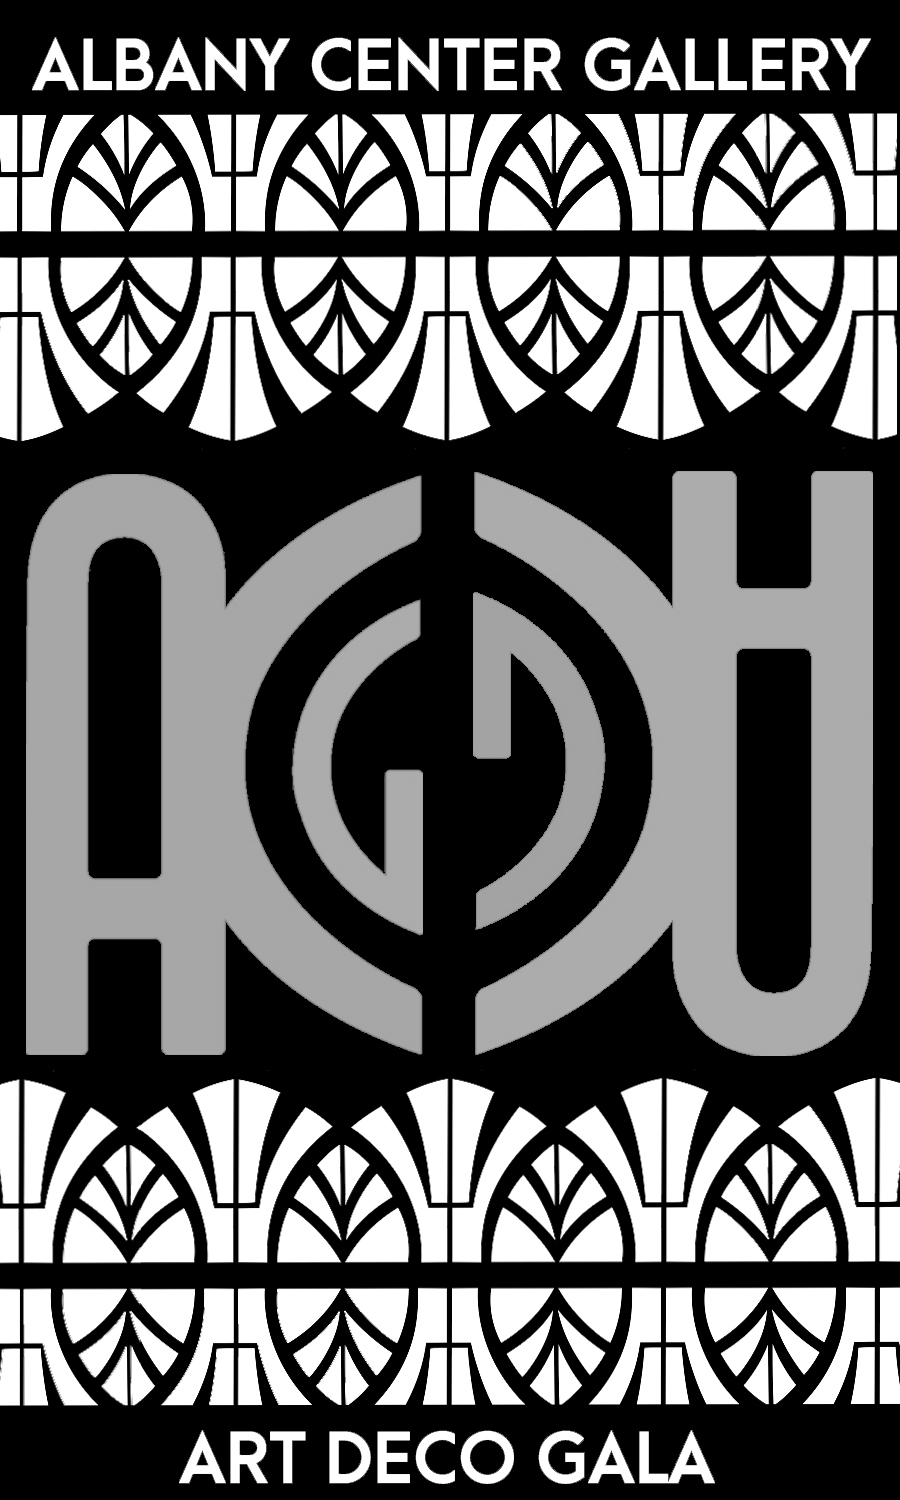 Art Deco gala logo